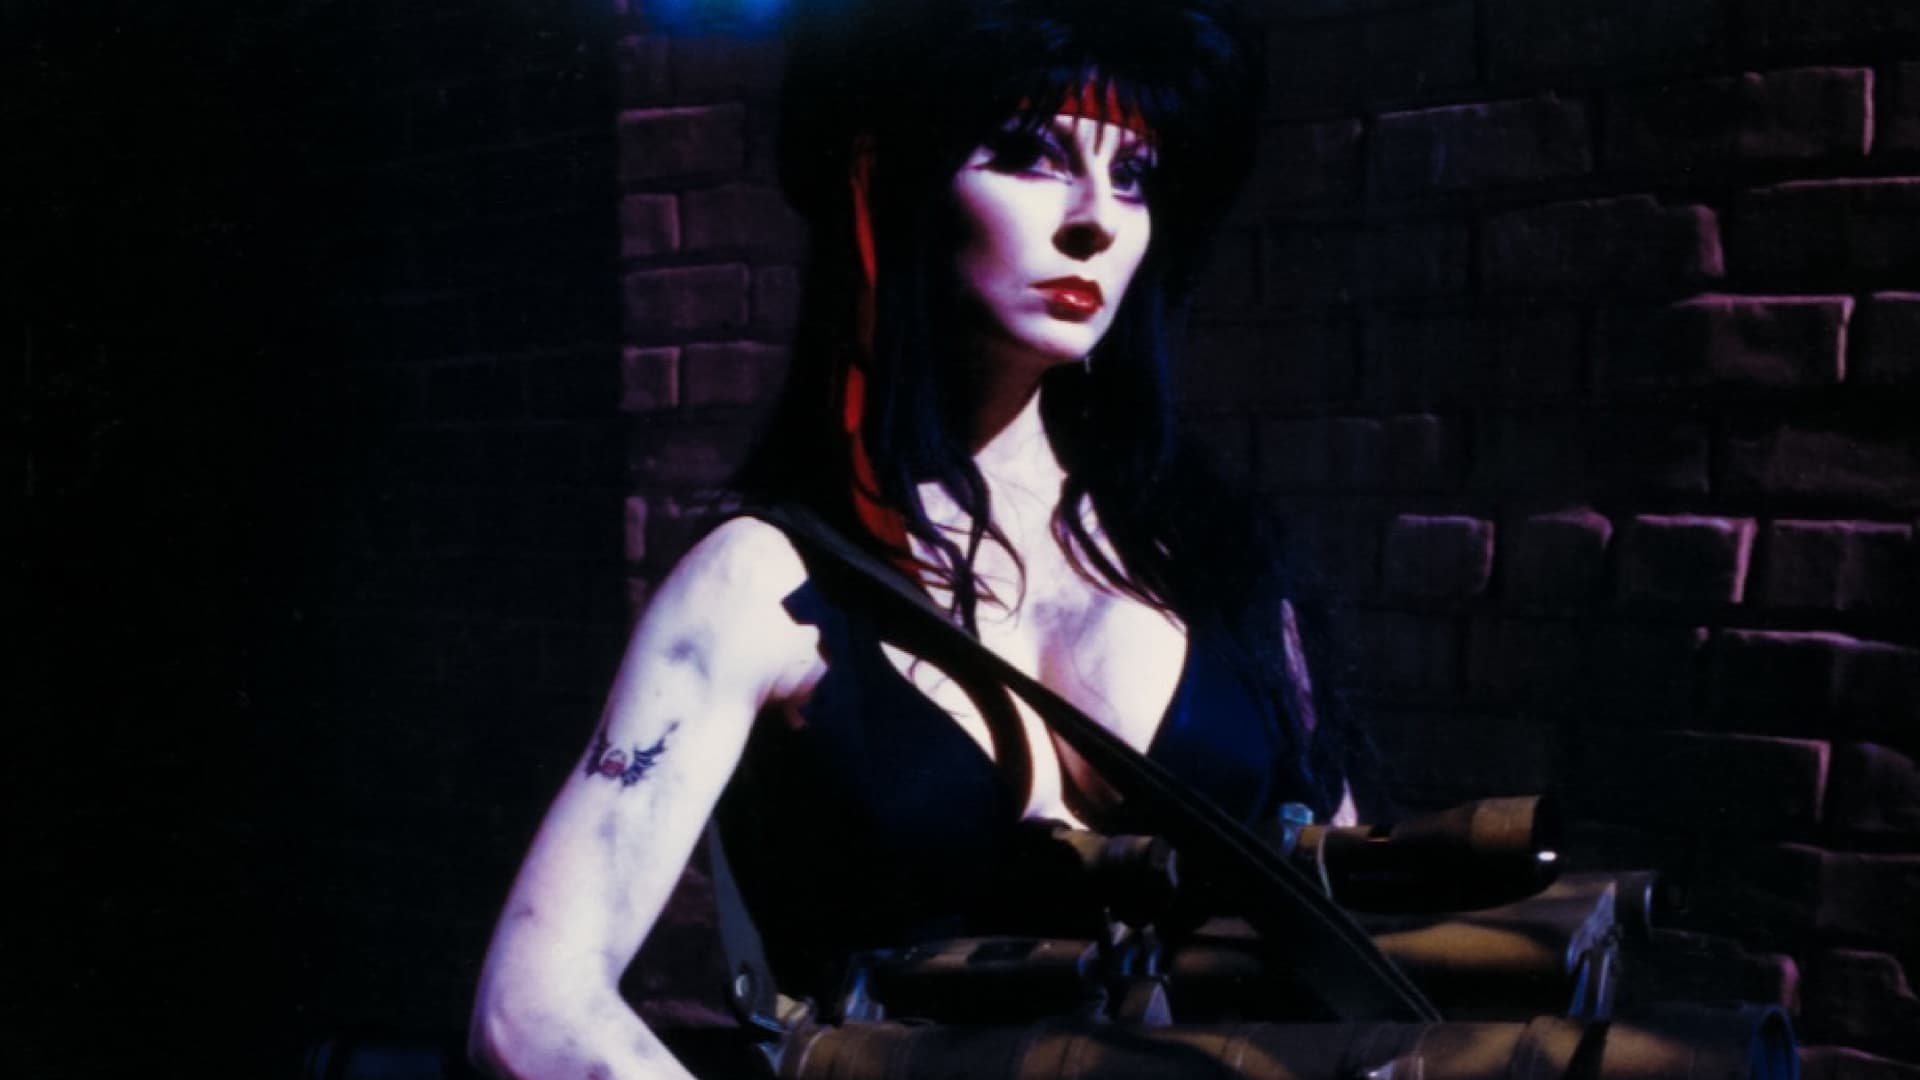 Image du film Elvira, maîtresse des ténèbres hcb0v8mke0flwsqqpe93r4kdyj0jpg